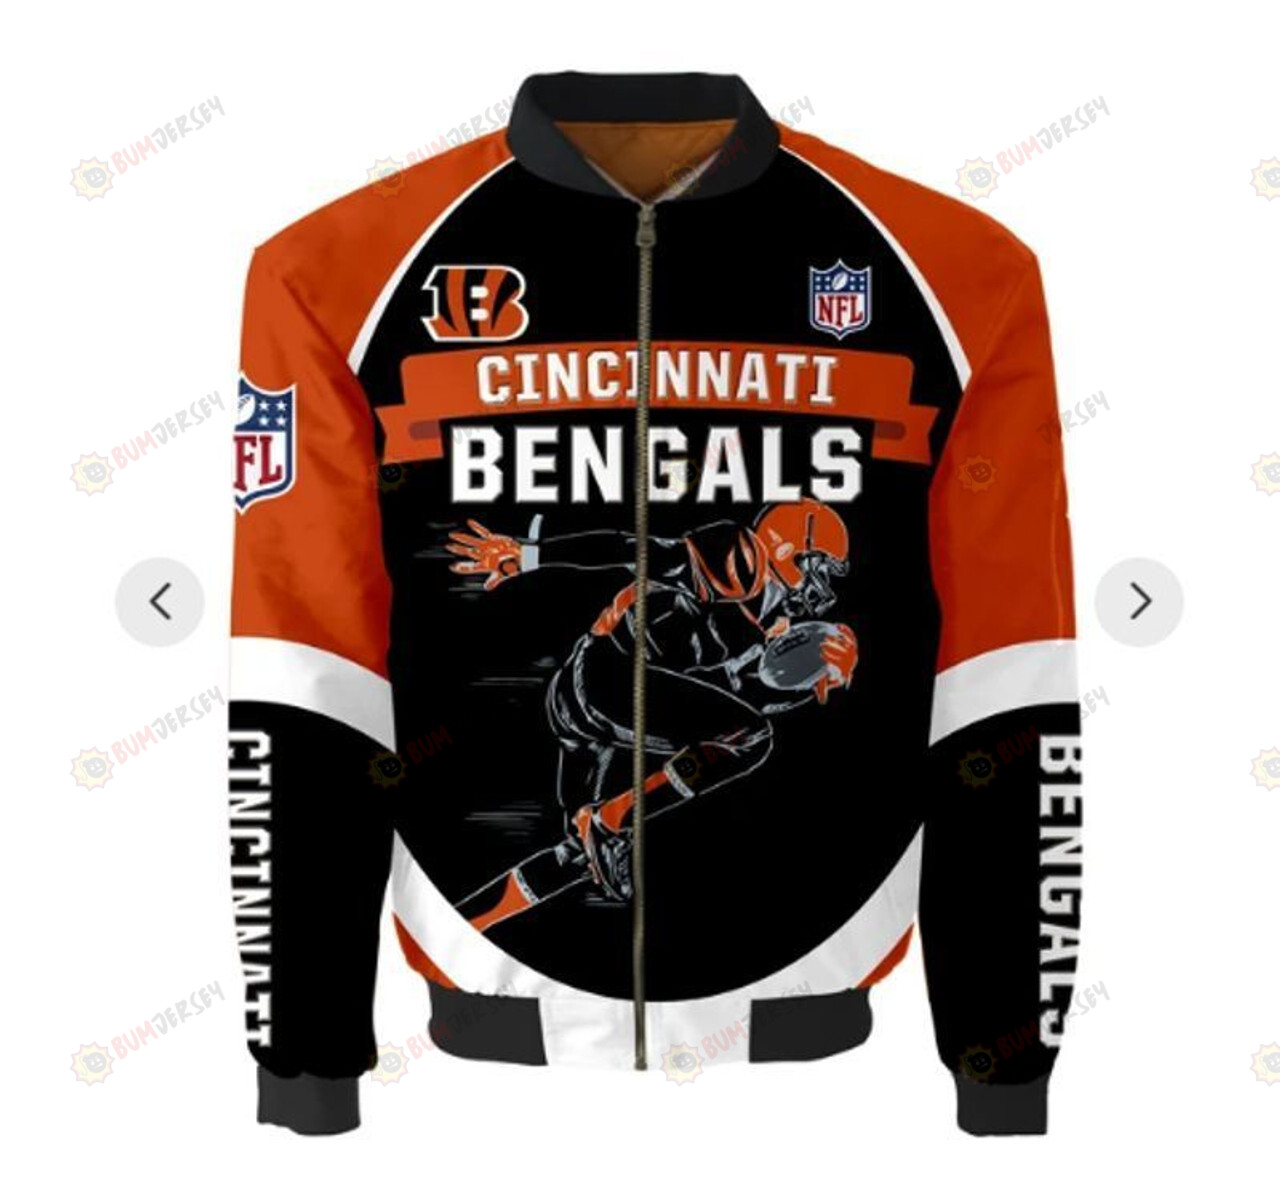 Cincinnati Bengals Players Running Pattern Bomber Jacket - Black And Orange